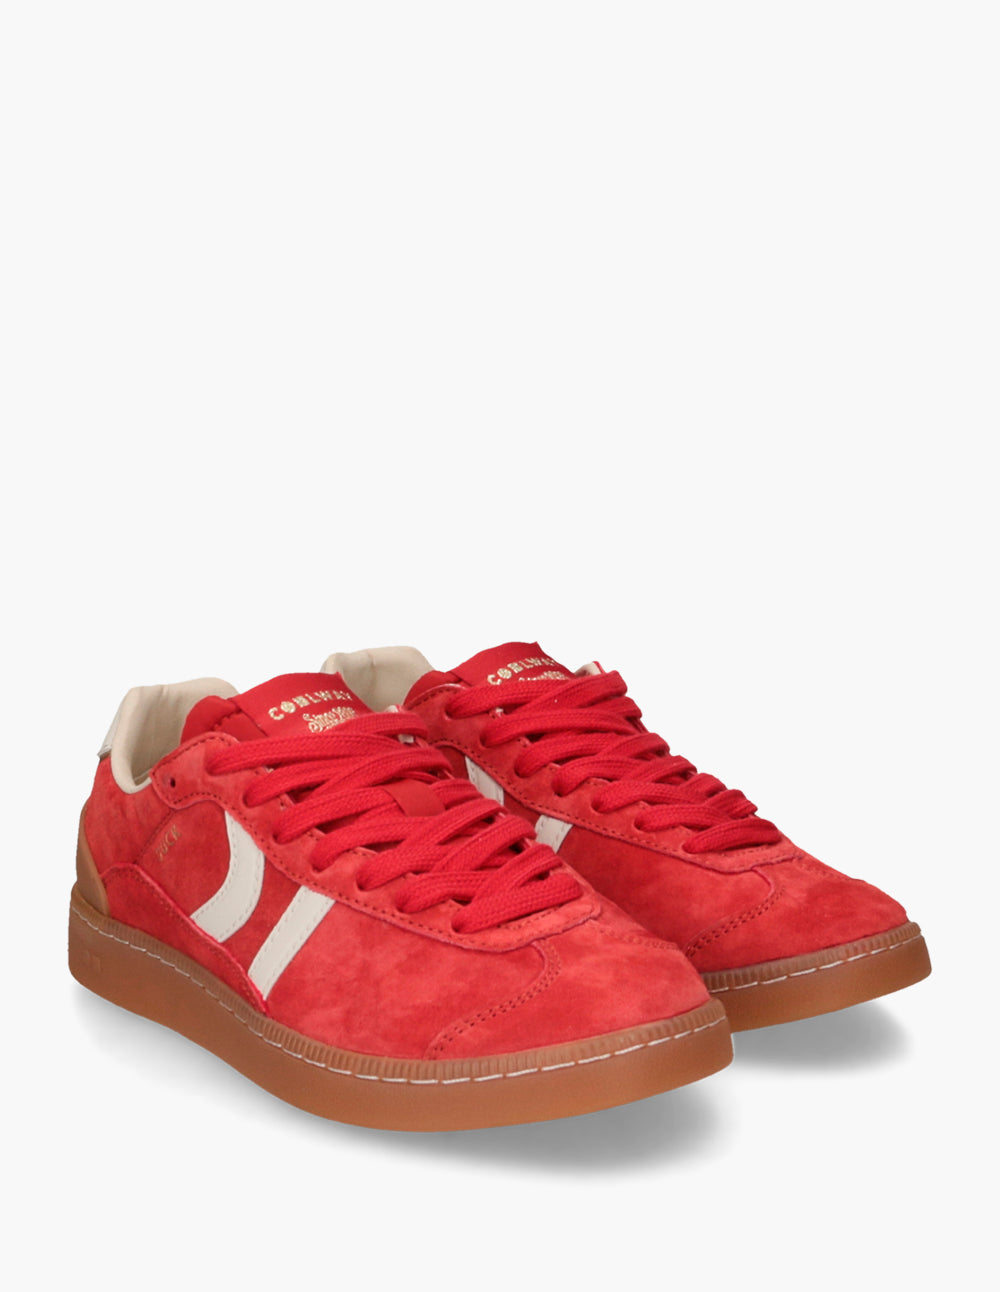 Coolway Deportivas rush moda joven rojo Rojo - Zapatos Multideporte Mujer  55,96 €